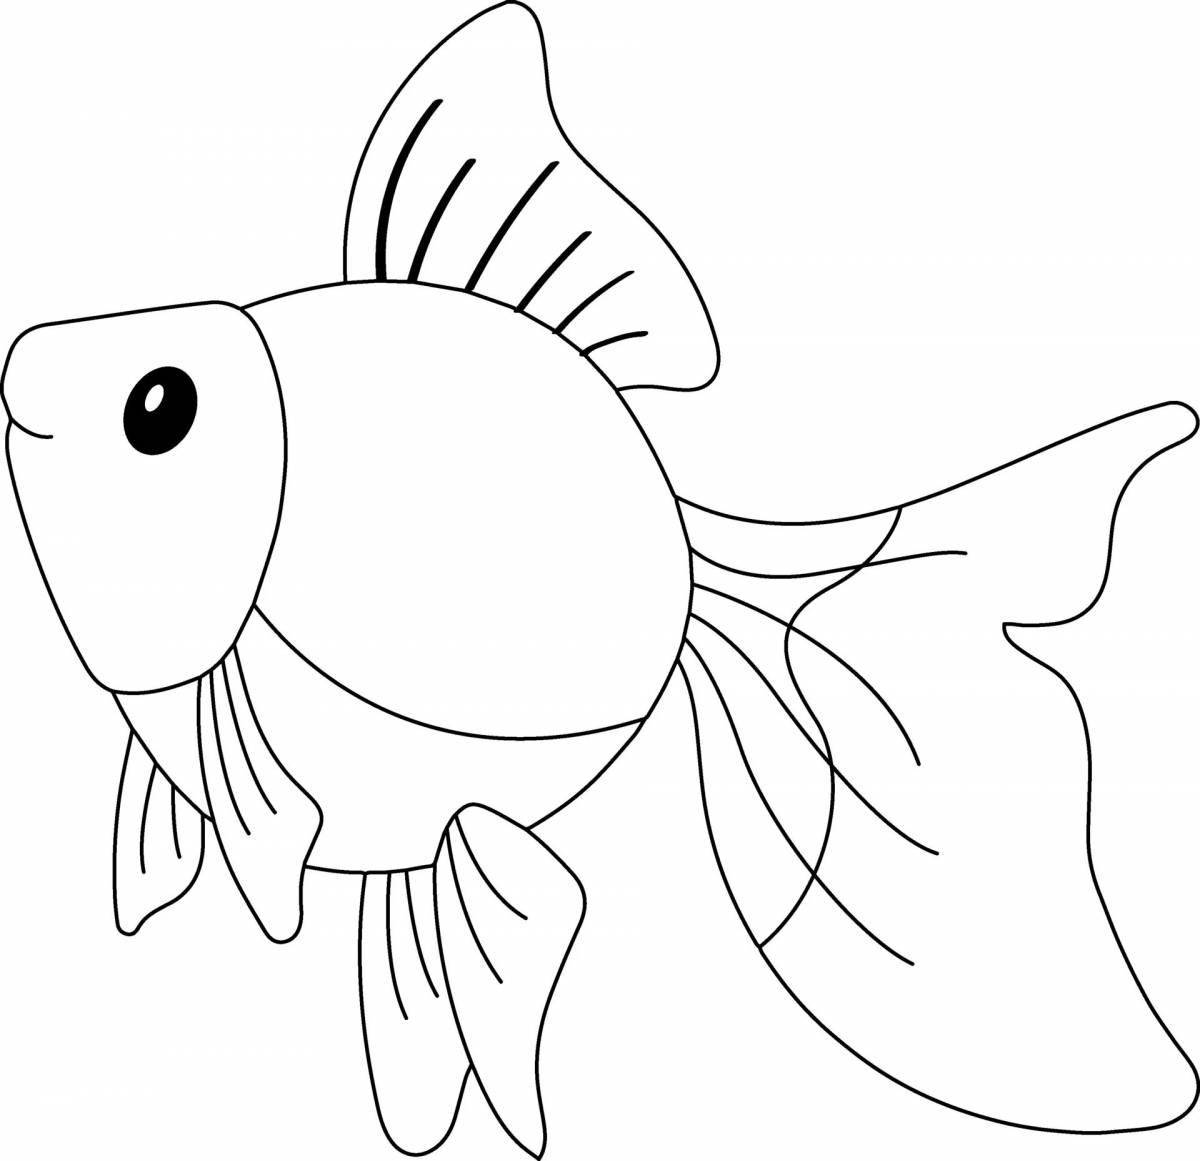 Fun coloring goldfish for kids